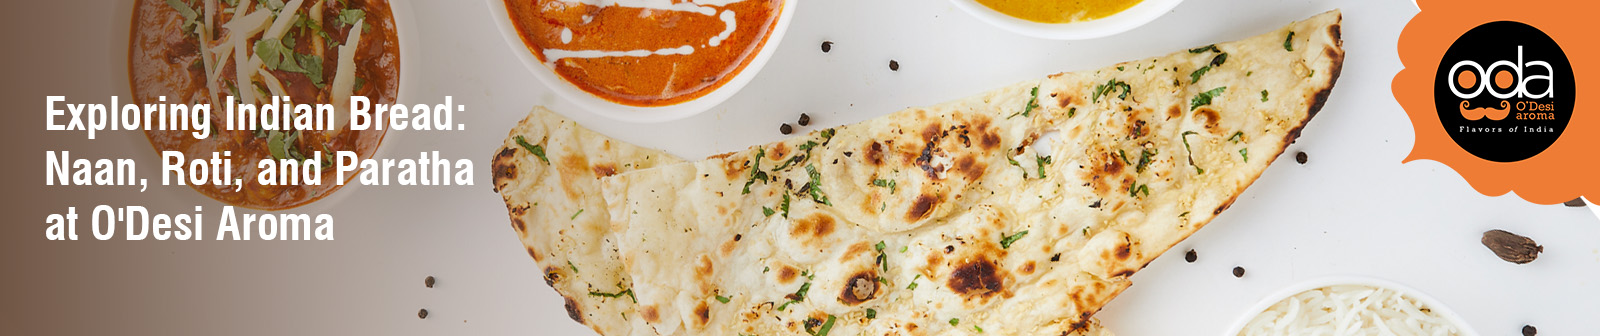 Exploring Indian Bread Naan Roti and Paratha at ODesi Aroma Blog - Indian Restaurant